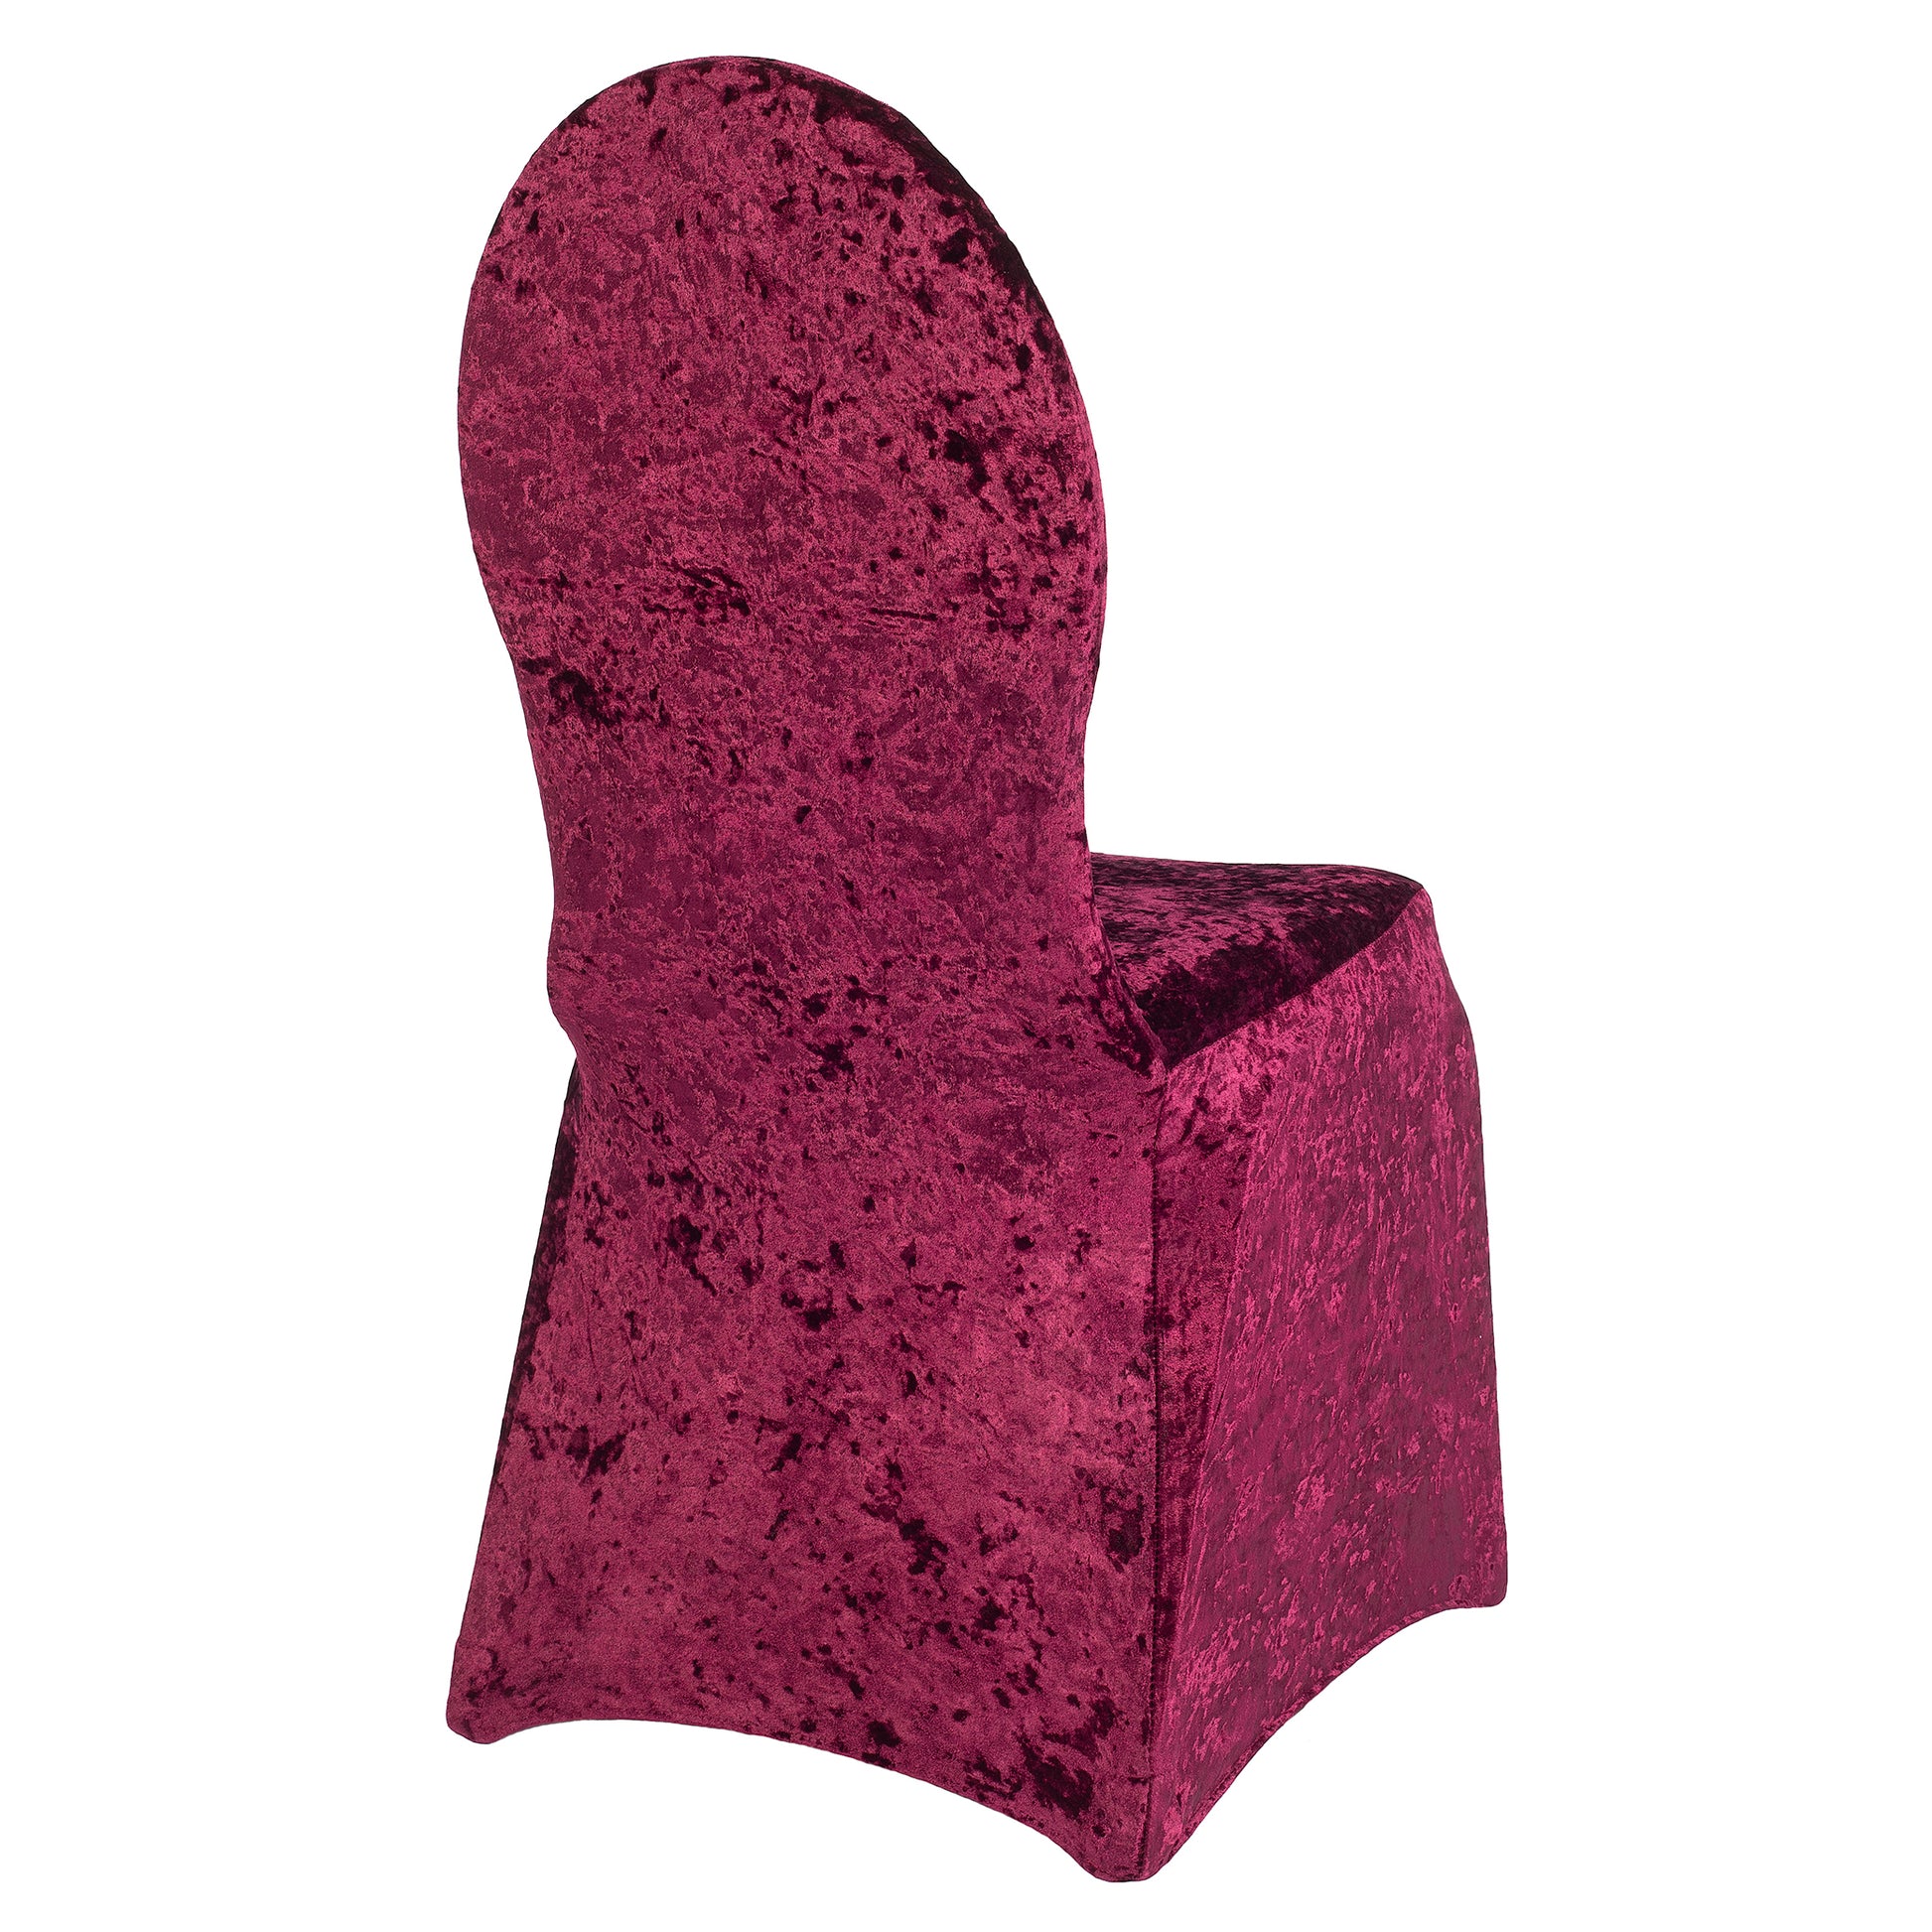 Velvet Stretch Spandex Banquet Chair Cover - Burgundy - CV Linens